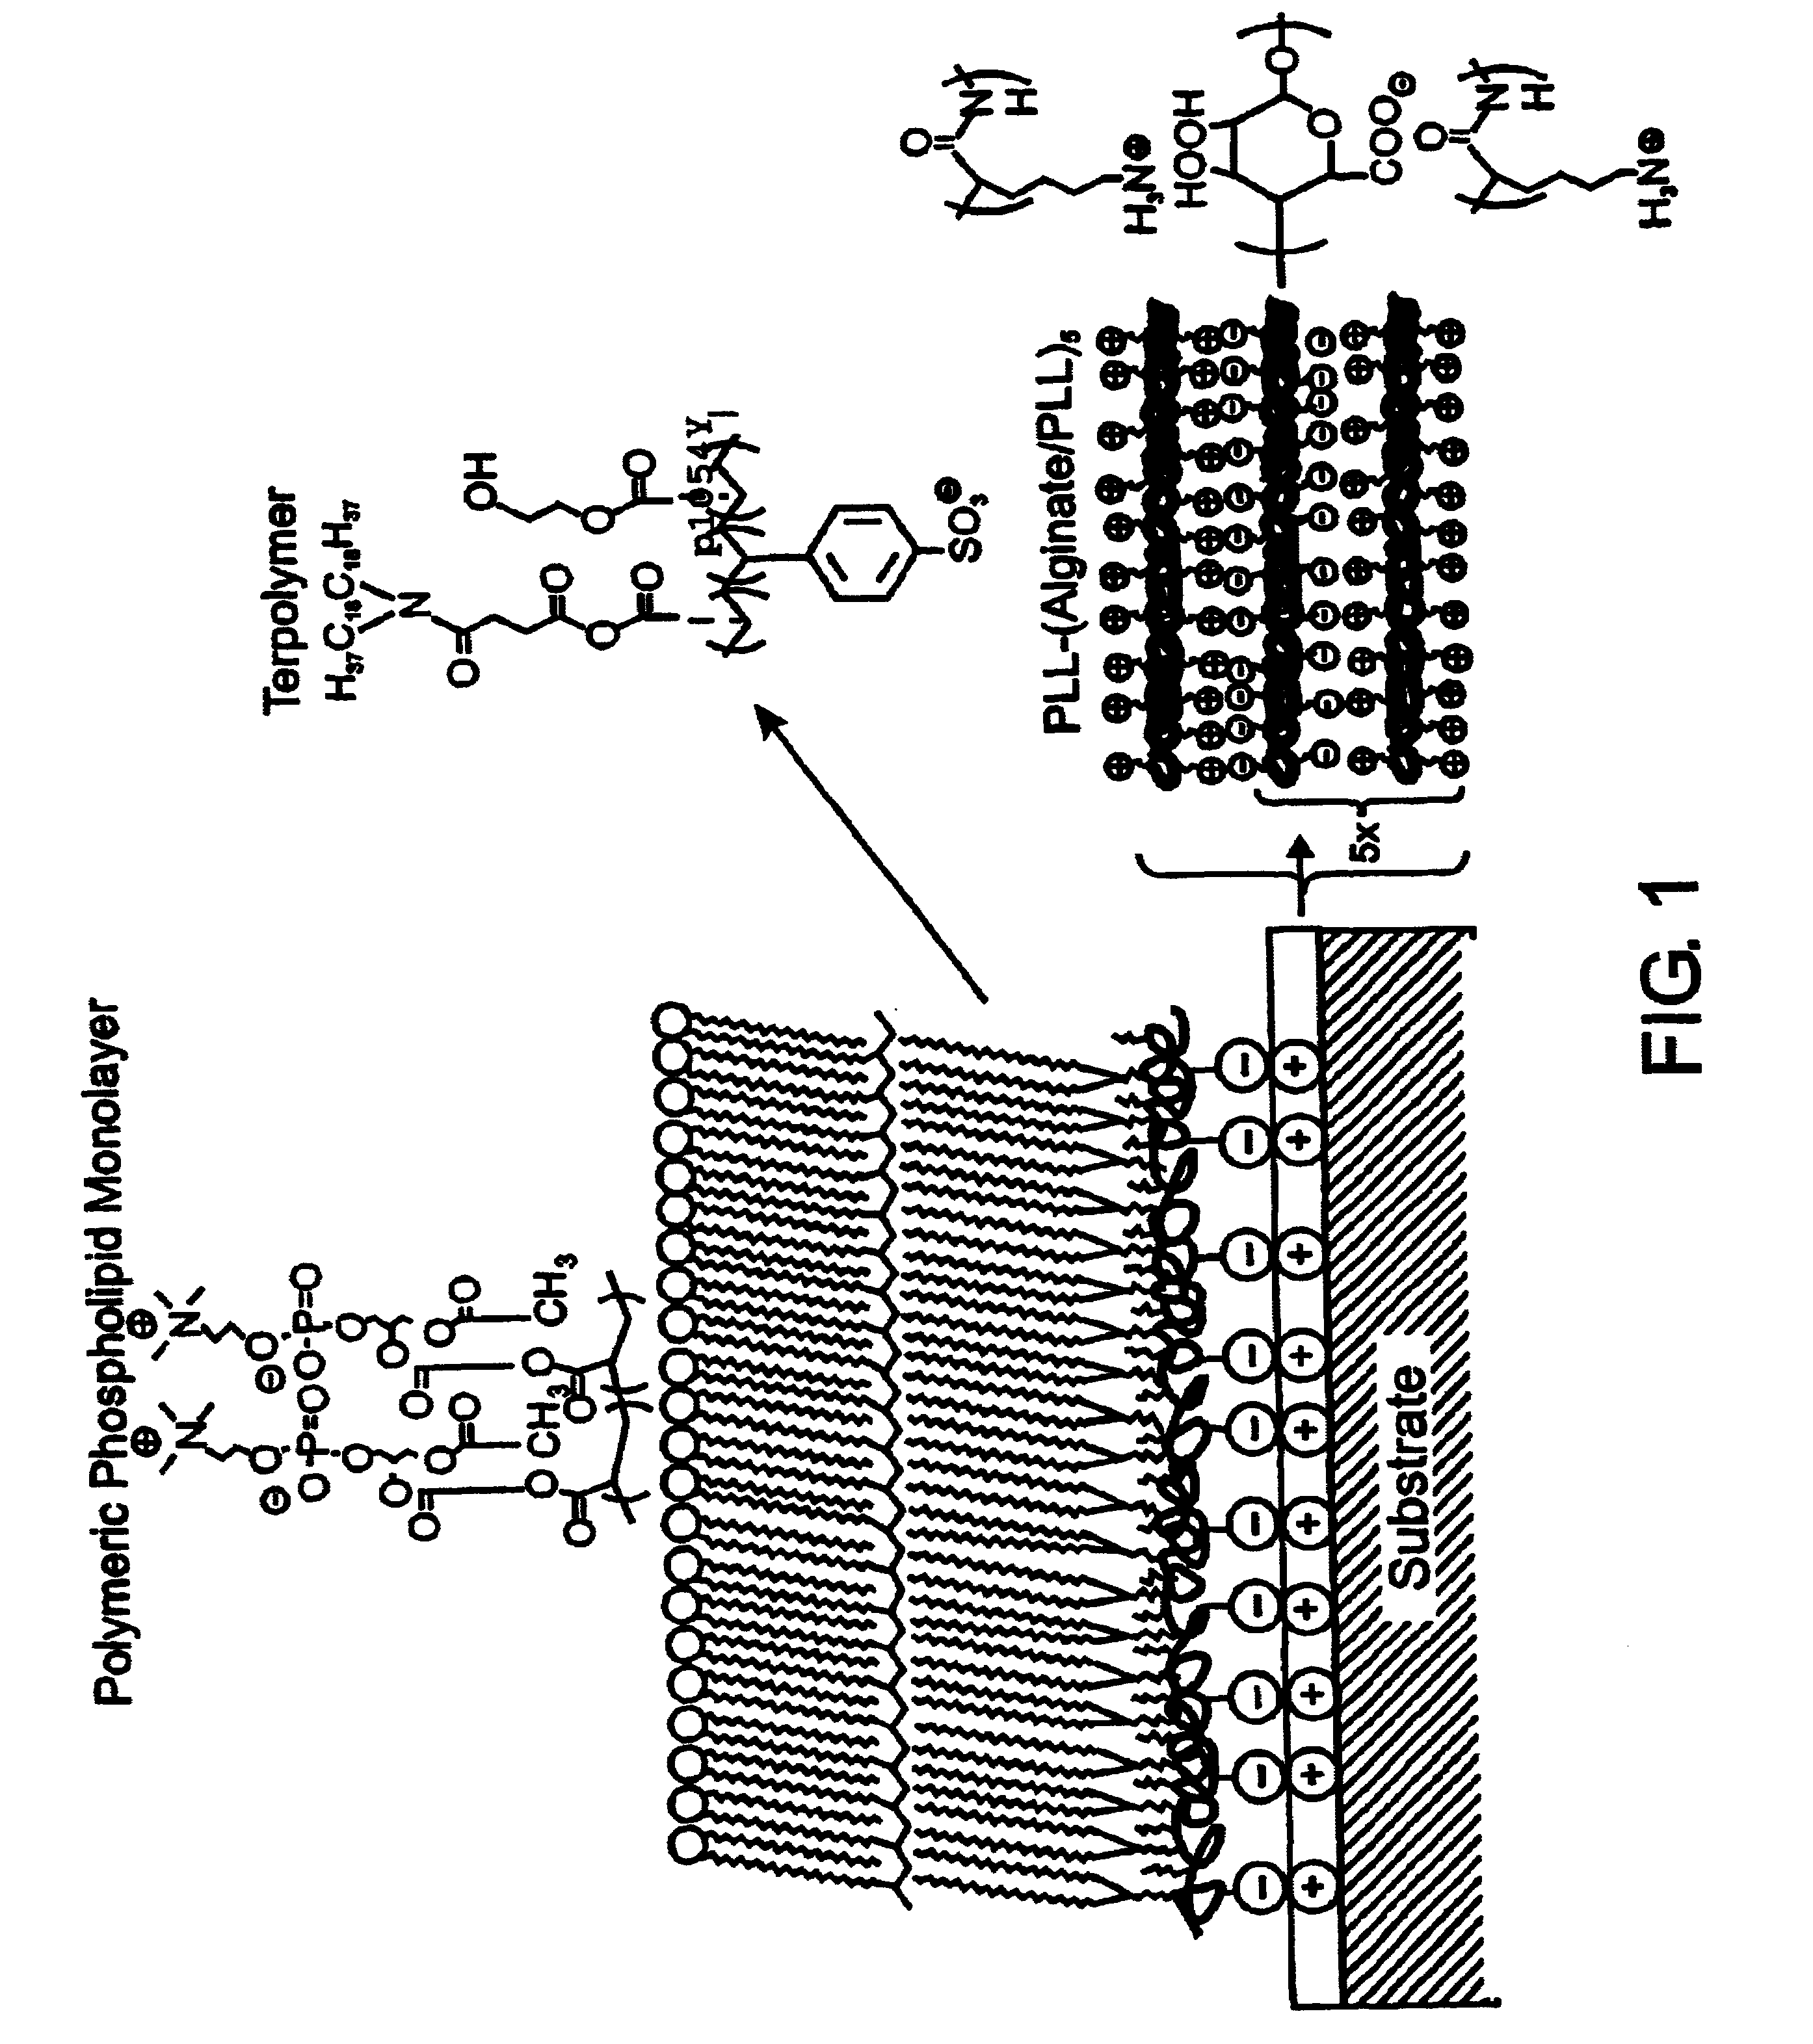 Biological component comprising artificial membrane